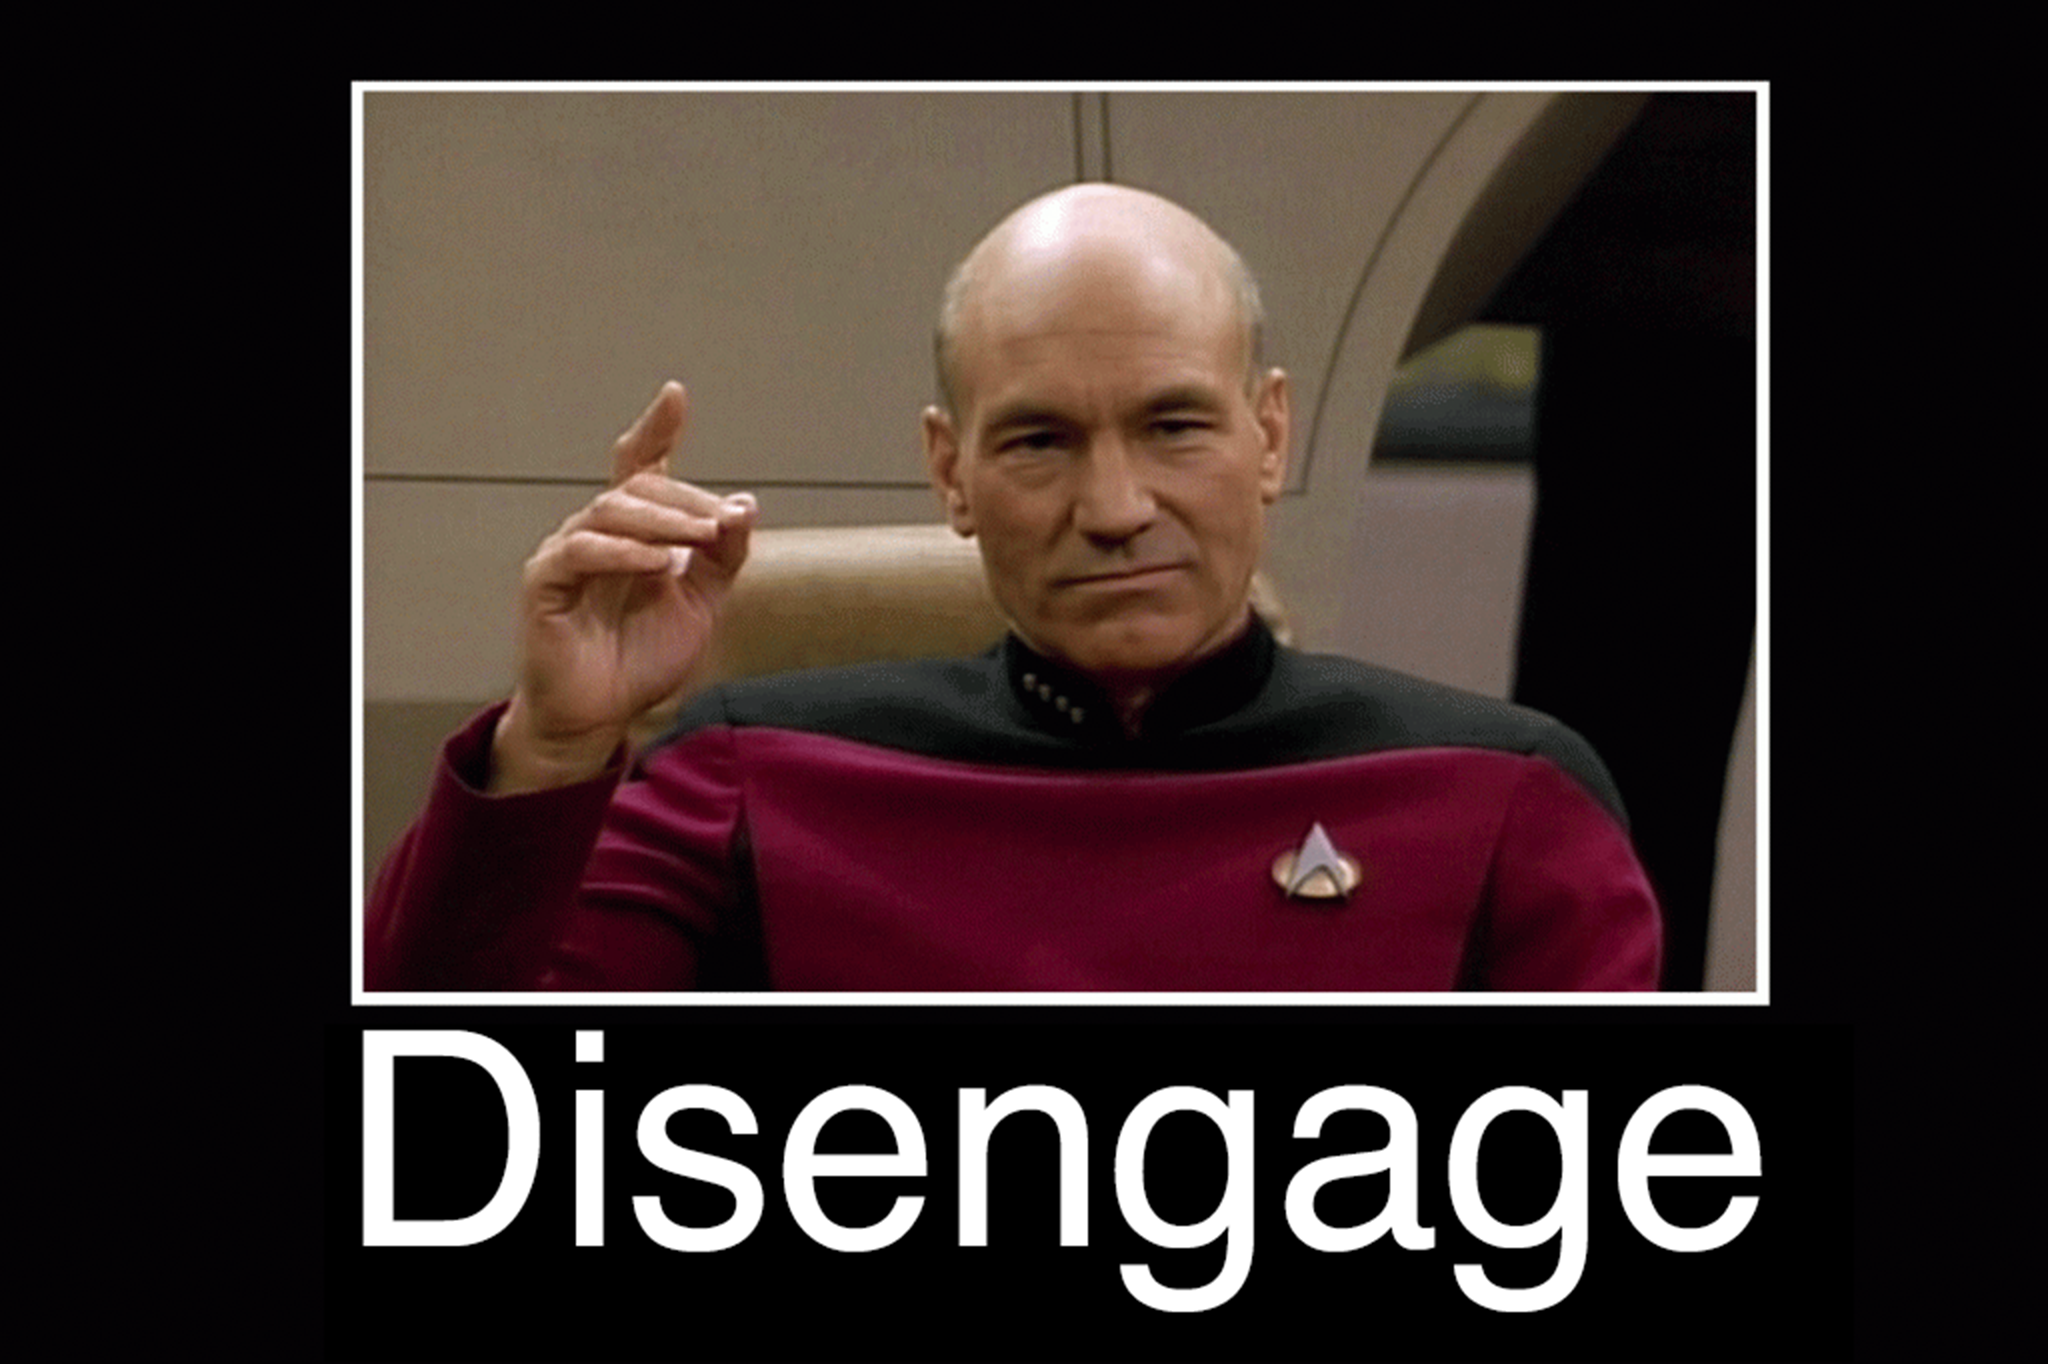 Picard-disengage.png